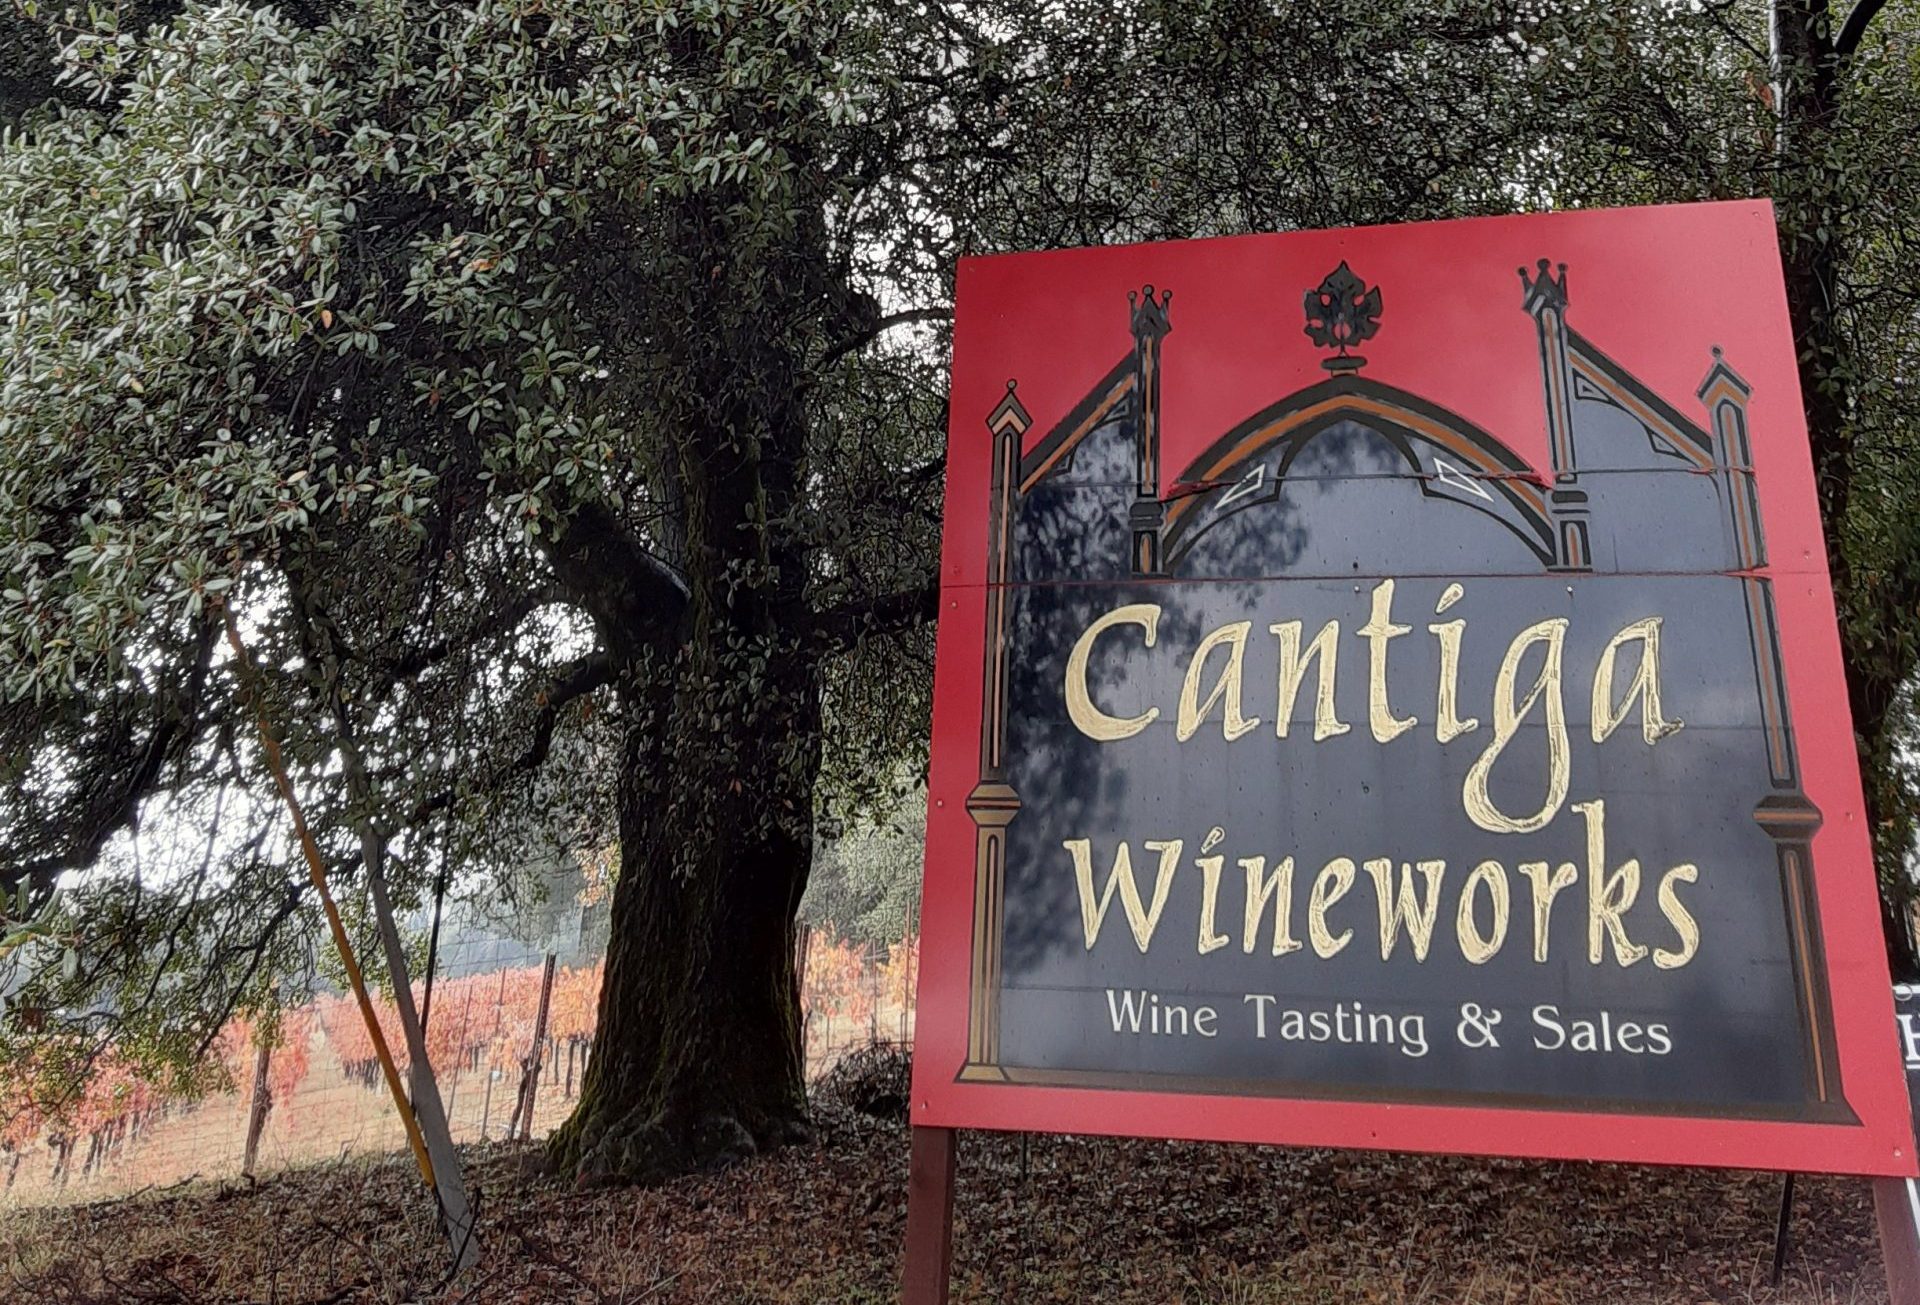 Cantiga Wineworks